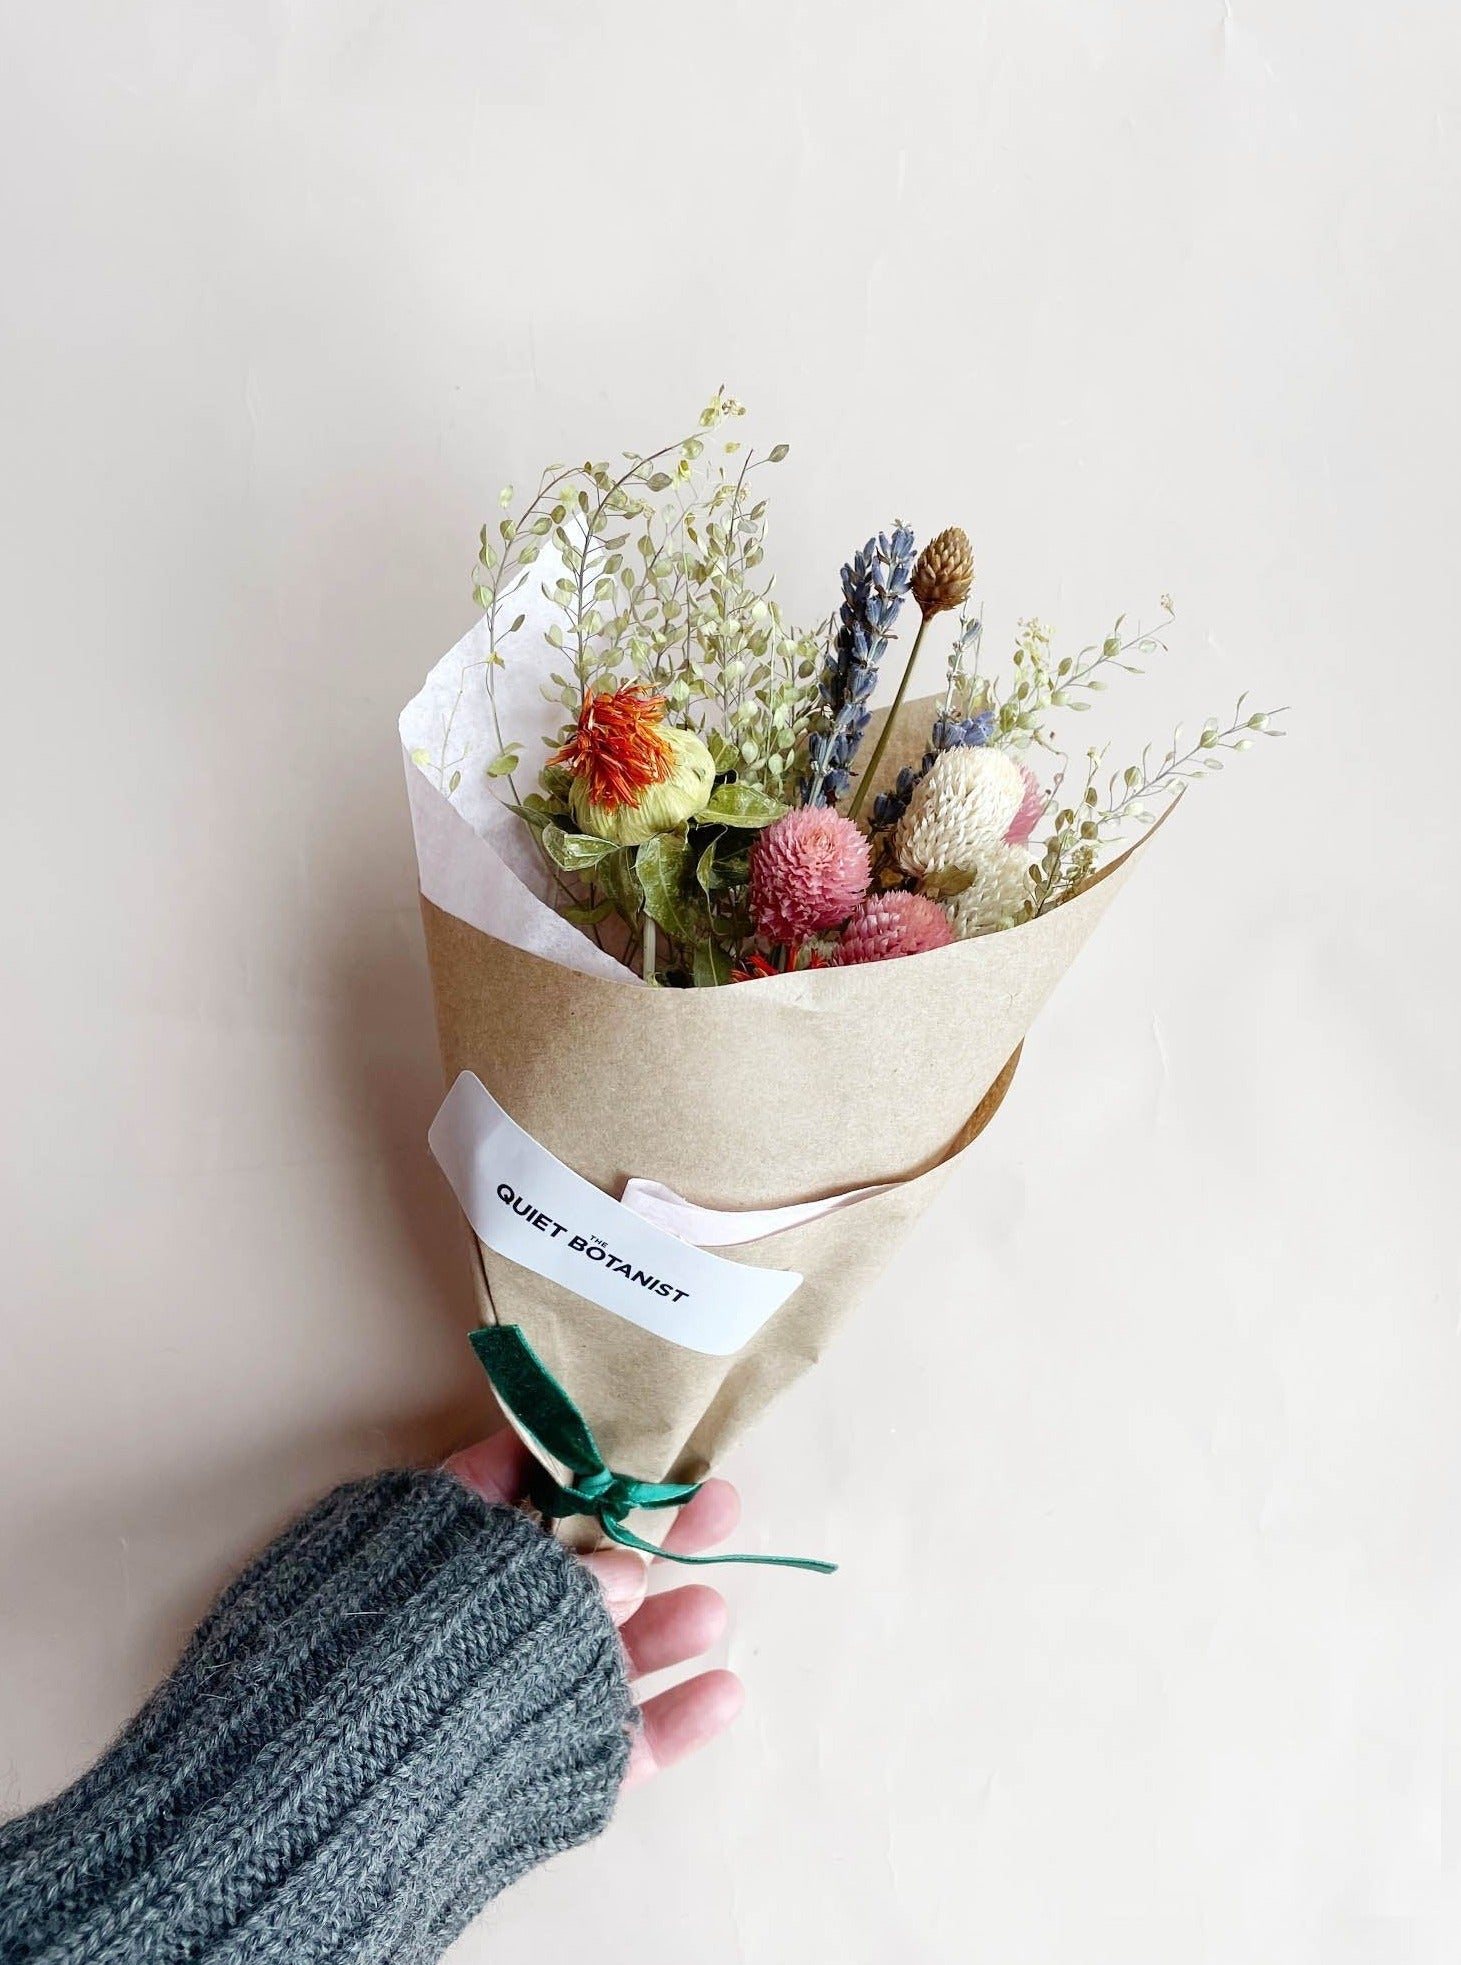  300 Pcs Dried Flowers with Stems Mini Flowers Bouquet